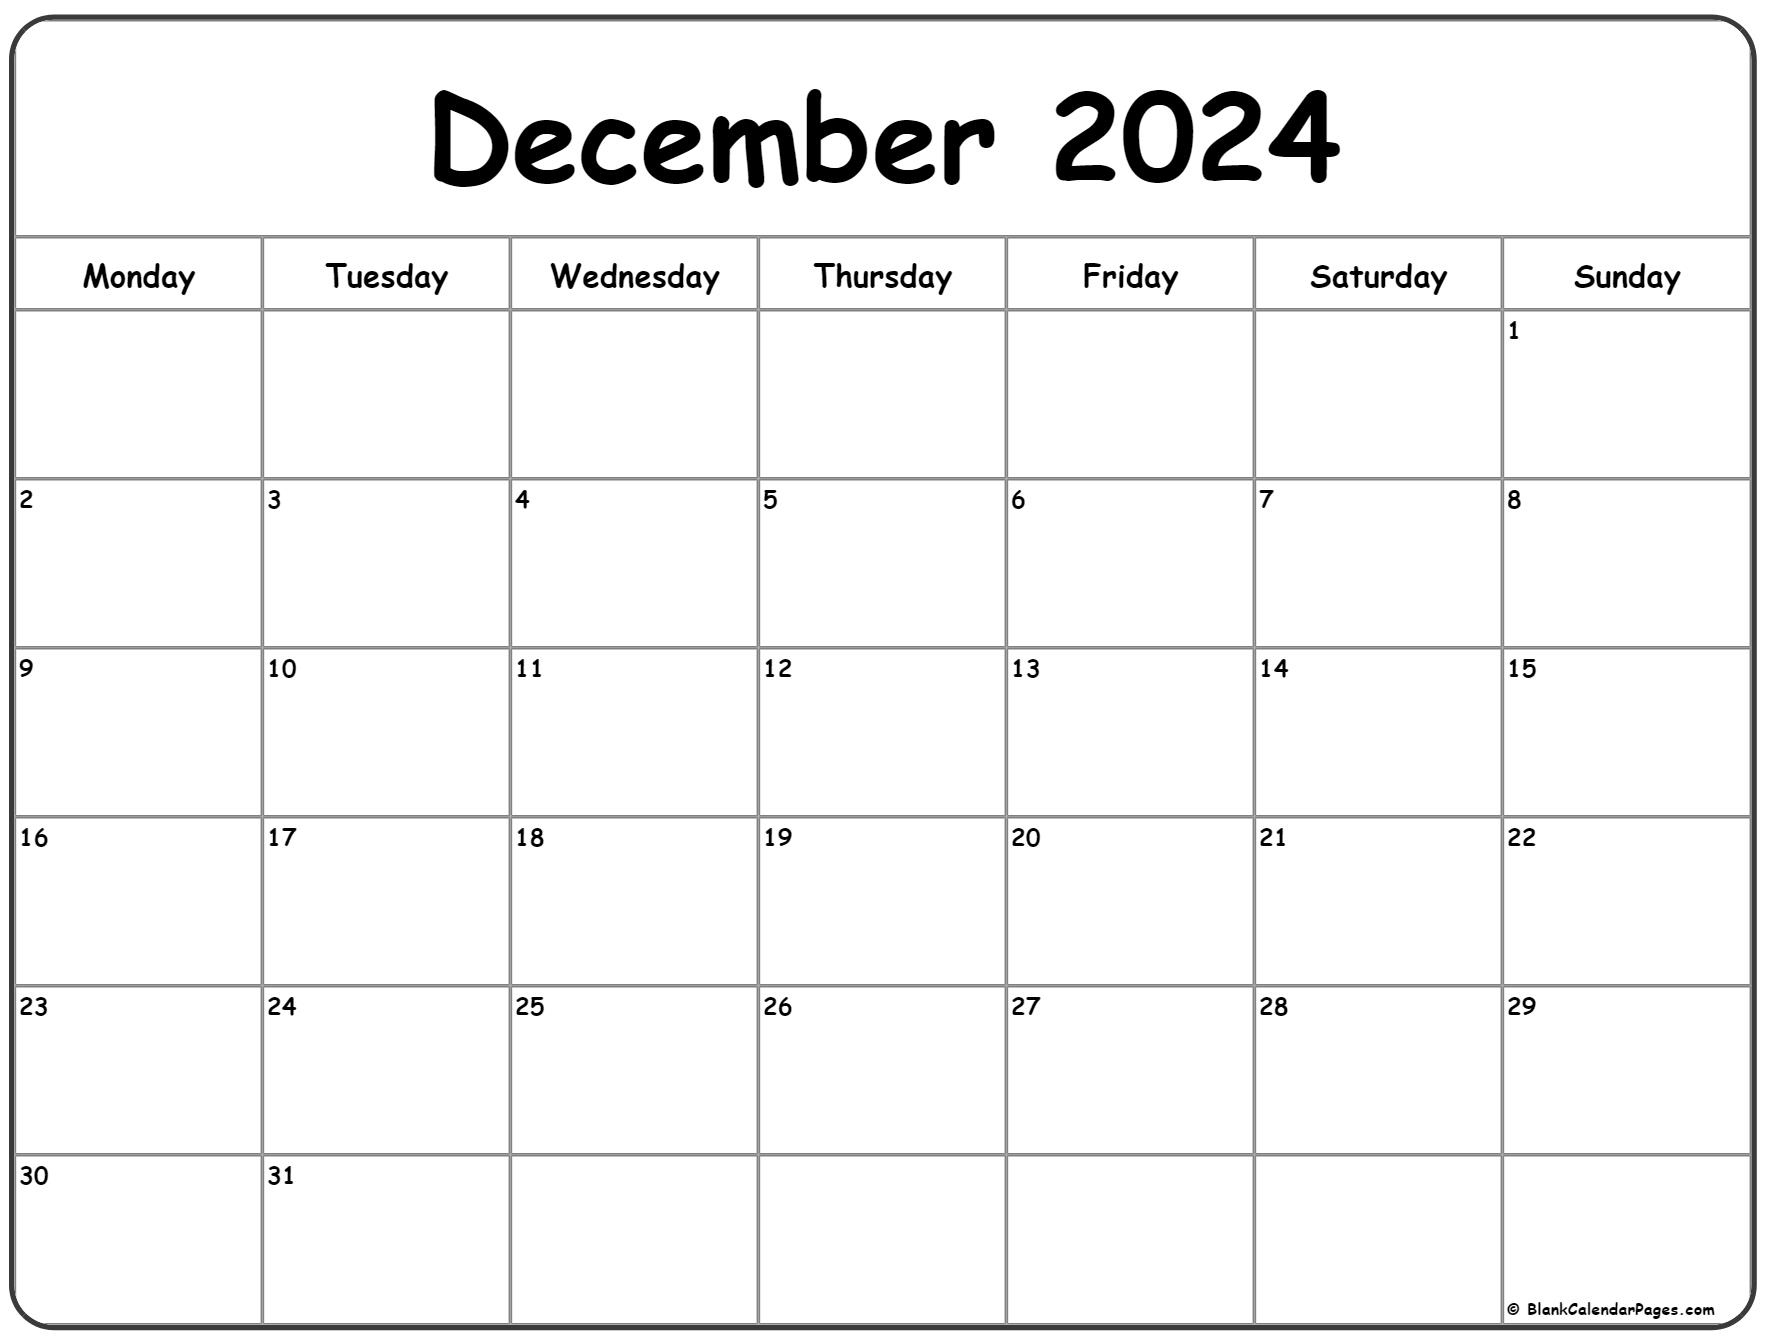 December 2024 Monday Calendar | Monday To Sunday | Printable Calendar Dec 2024